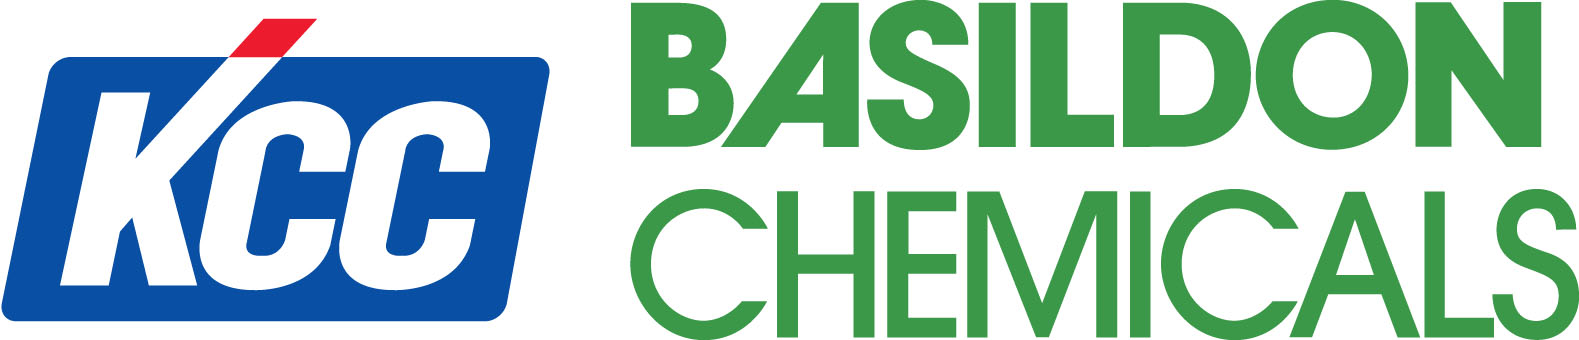 Basildon Chemical Co. Ltd